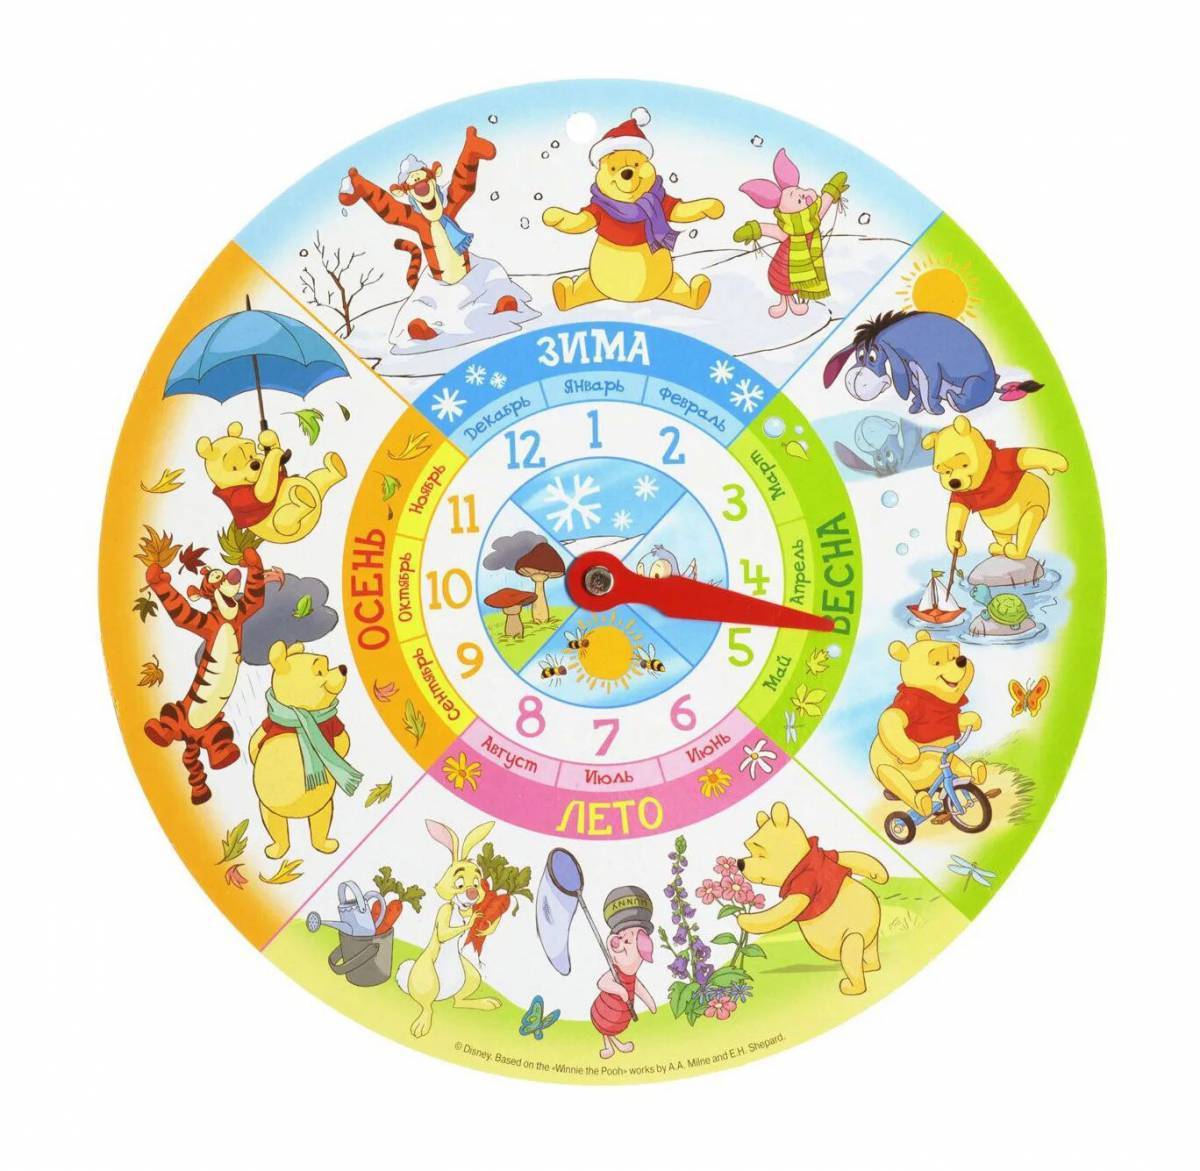 Календарь времена года. Календарь времена года для детей. Детский календарь времена года. Календарь для детей воемнам года.